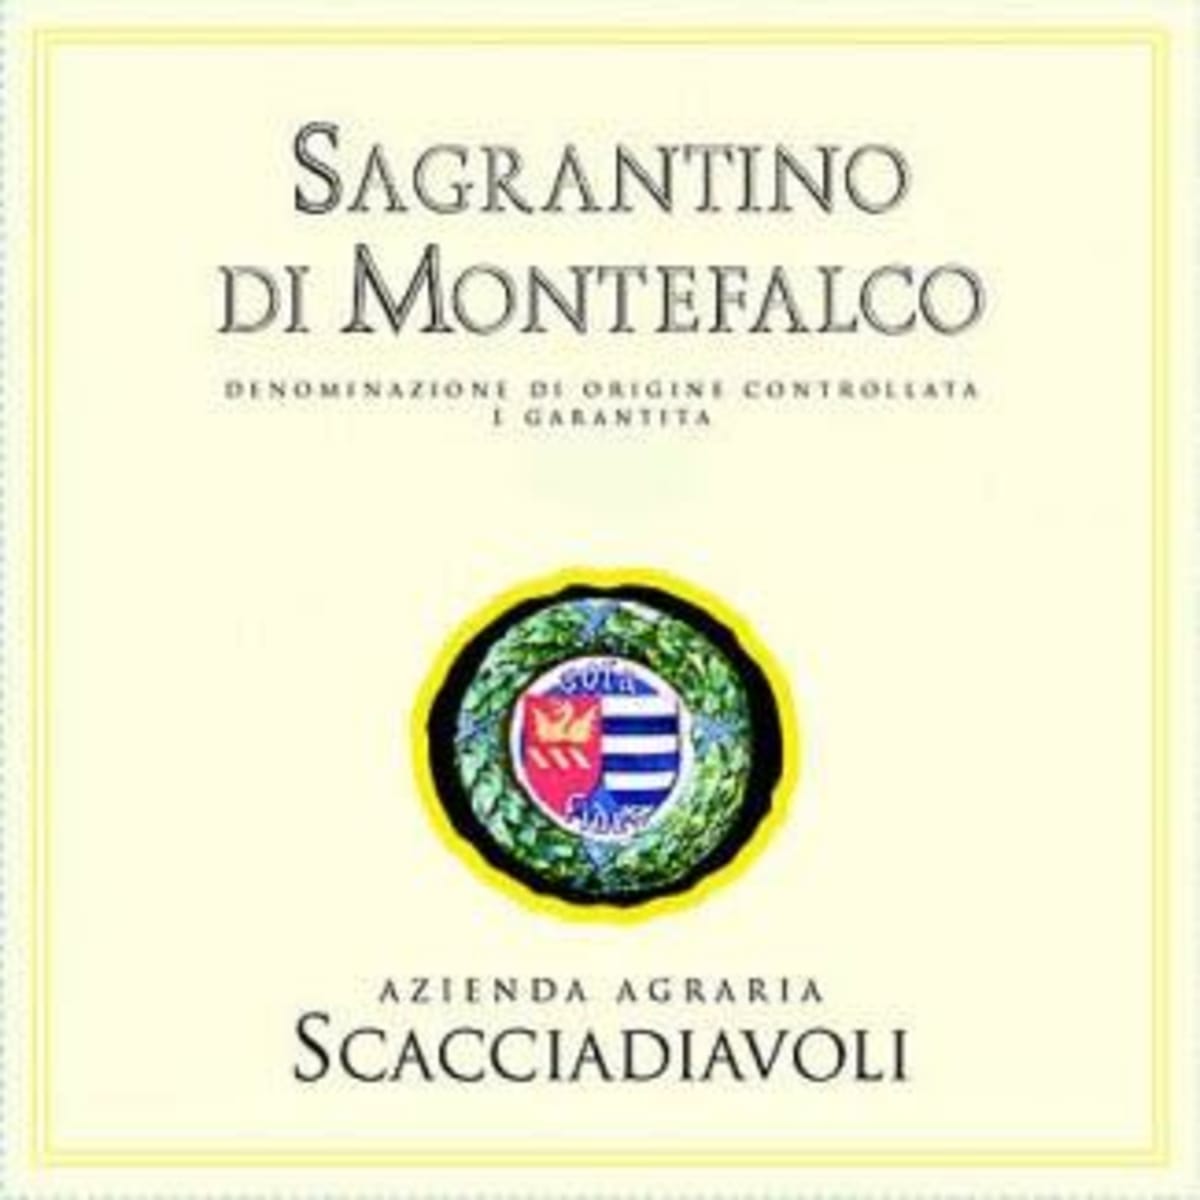 Scacciadiavoli Sagrantino di Montefalco 2011 Front Label